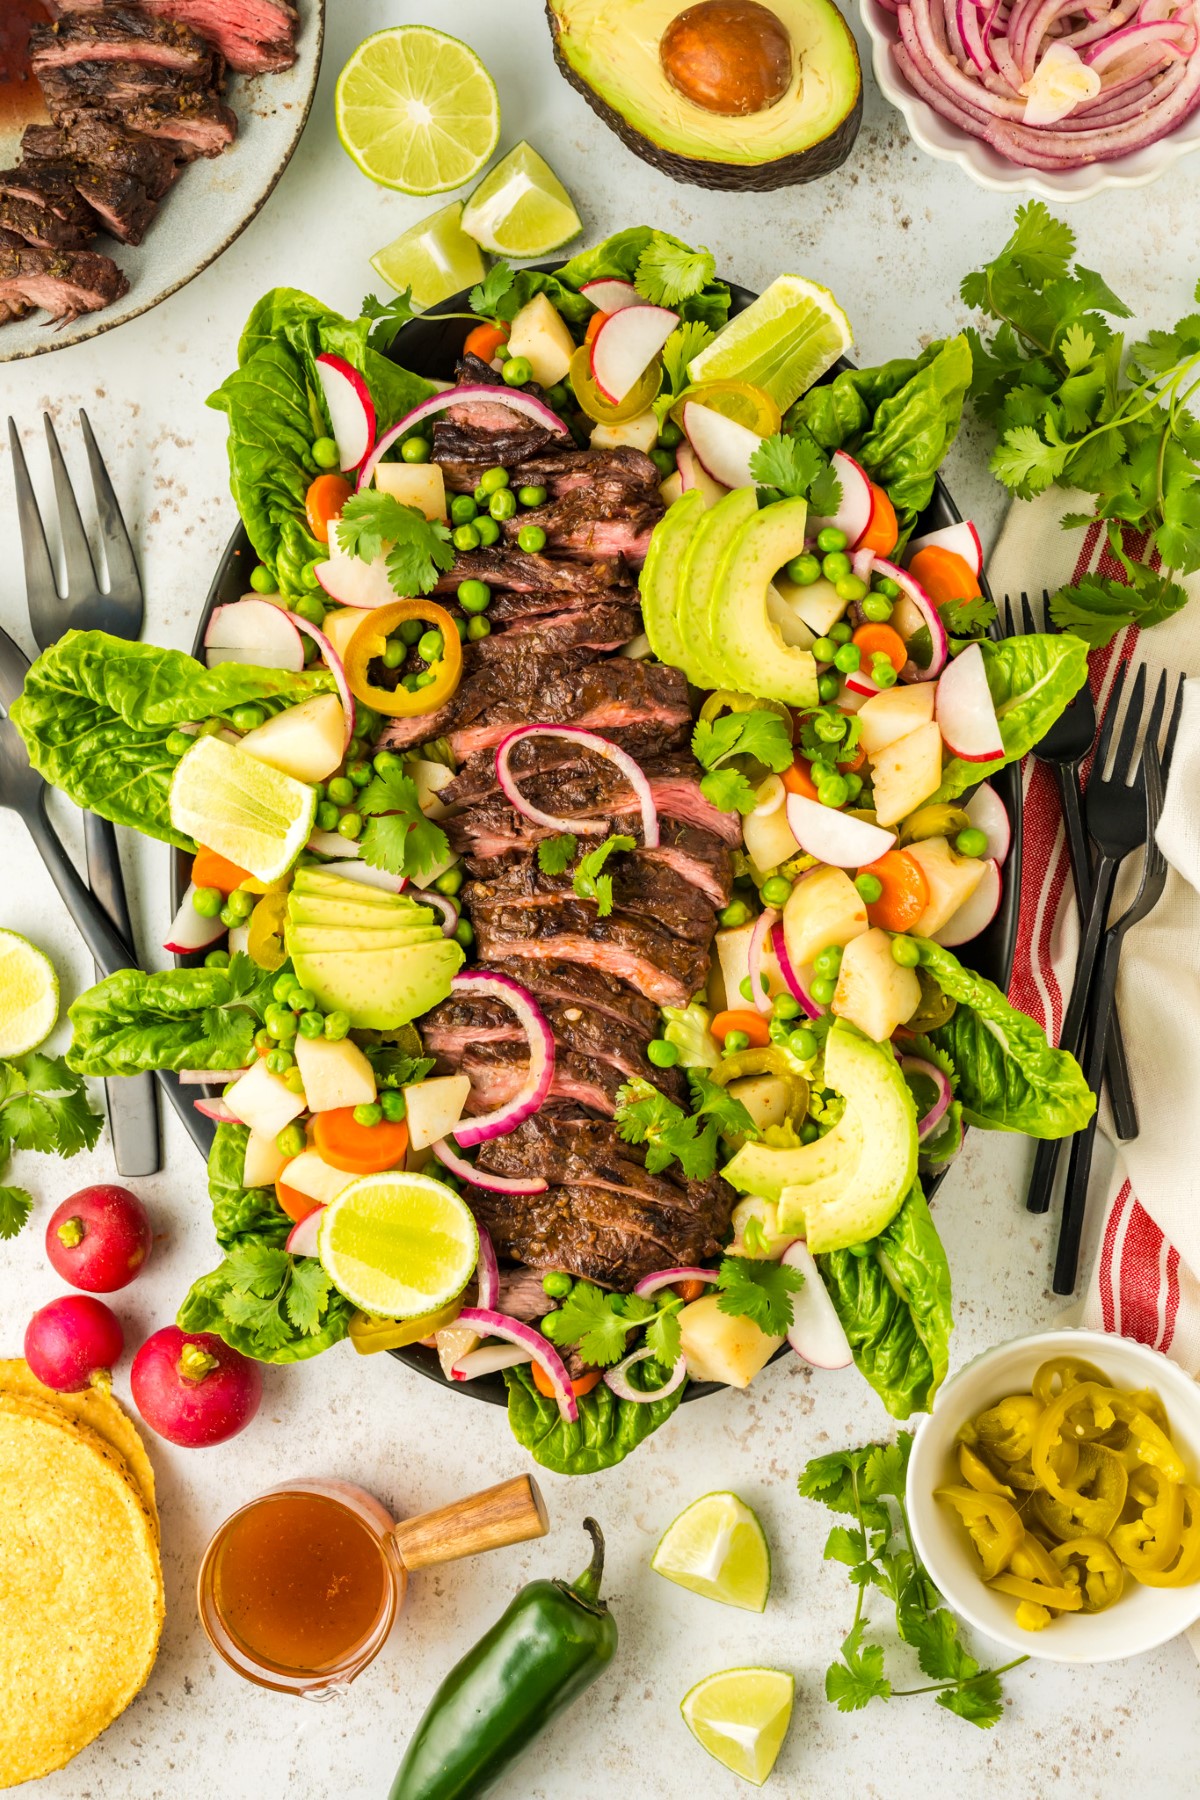 Grilled flank steak salad sefved on a large platter with all the vegetables and forks. Ready serve!